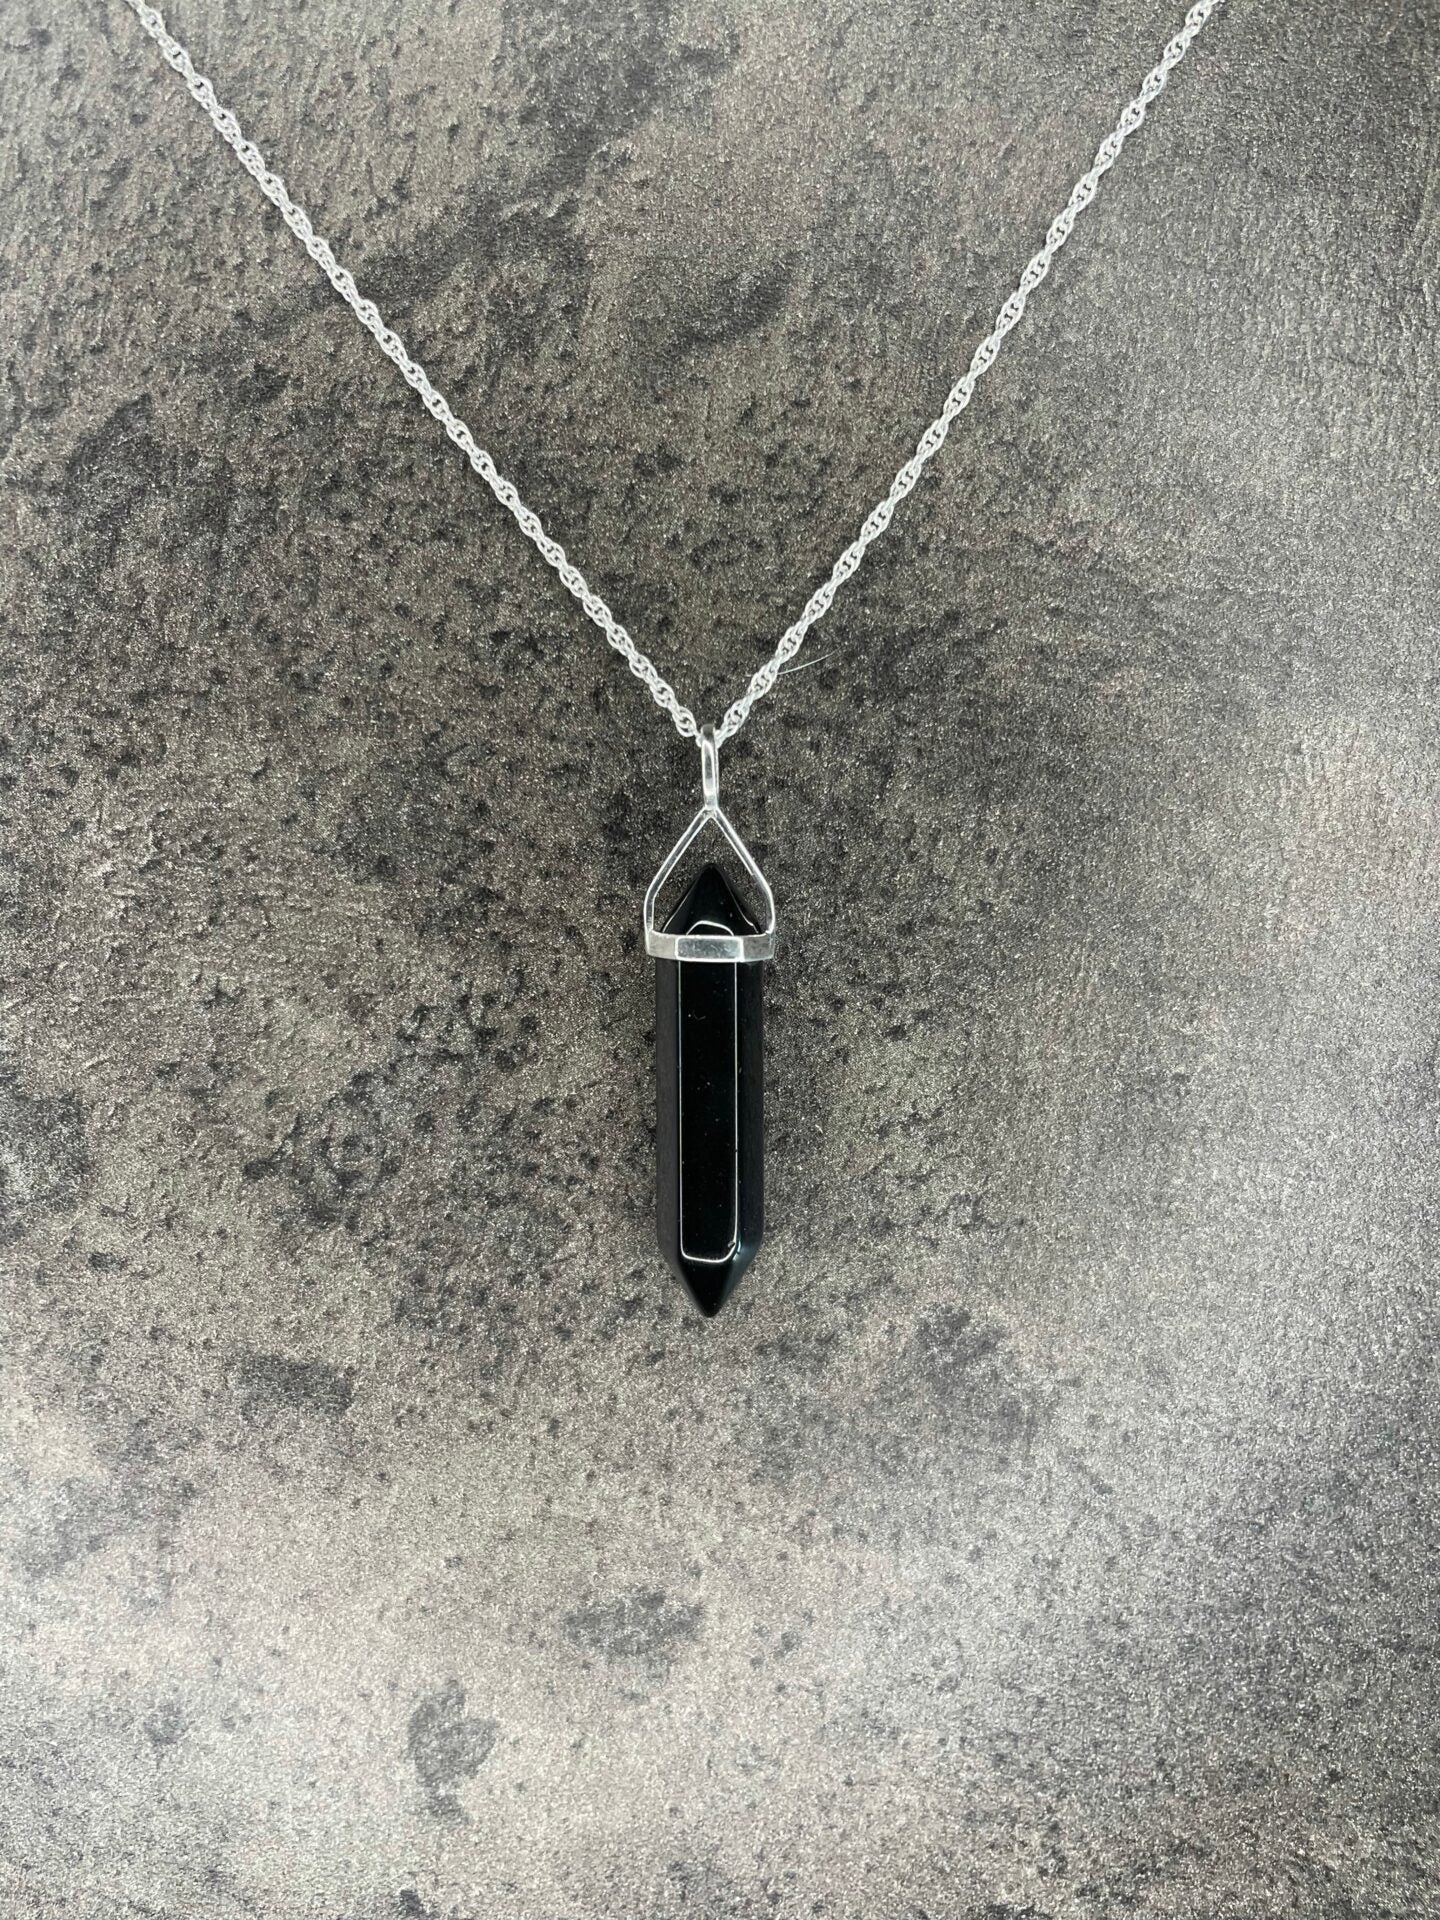 Protection pendant - Black obsidian